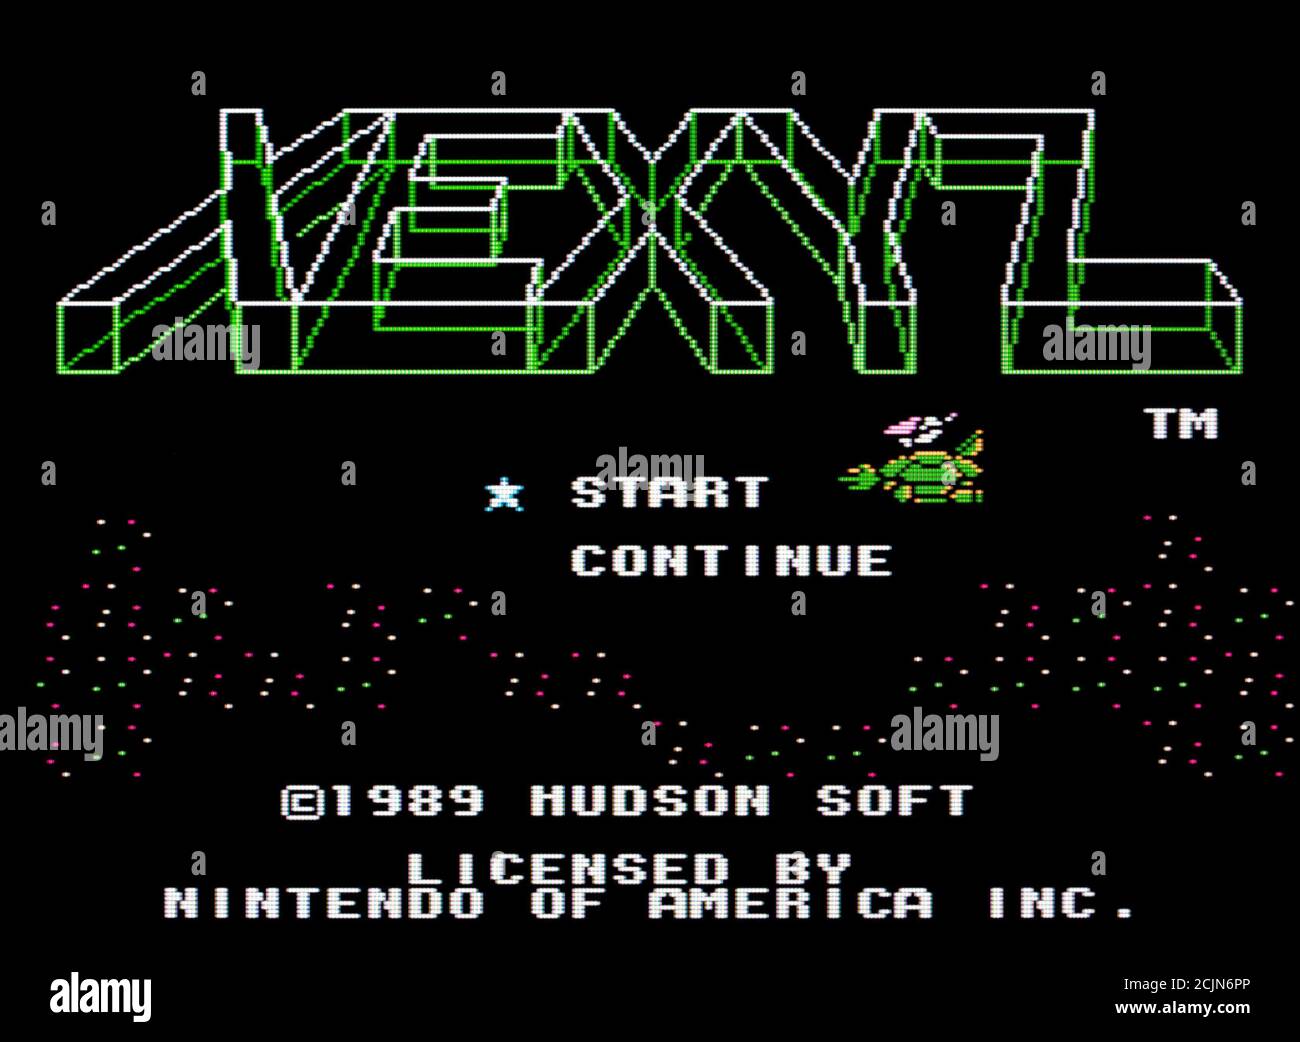 Xexyz - Nintendo Entertainment System - NES Videogame - Editorial use only Stock Photo